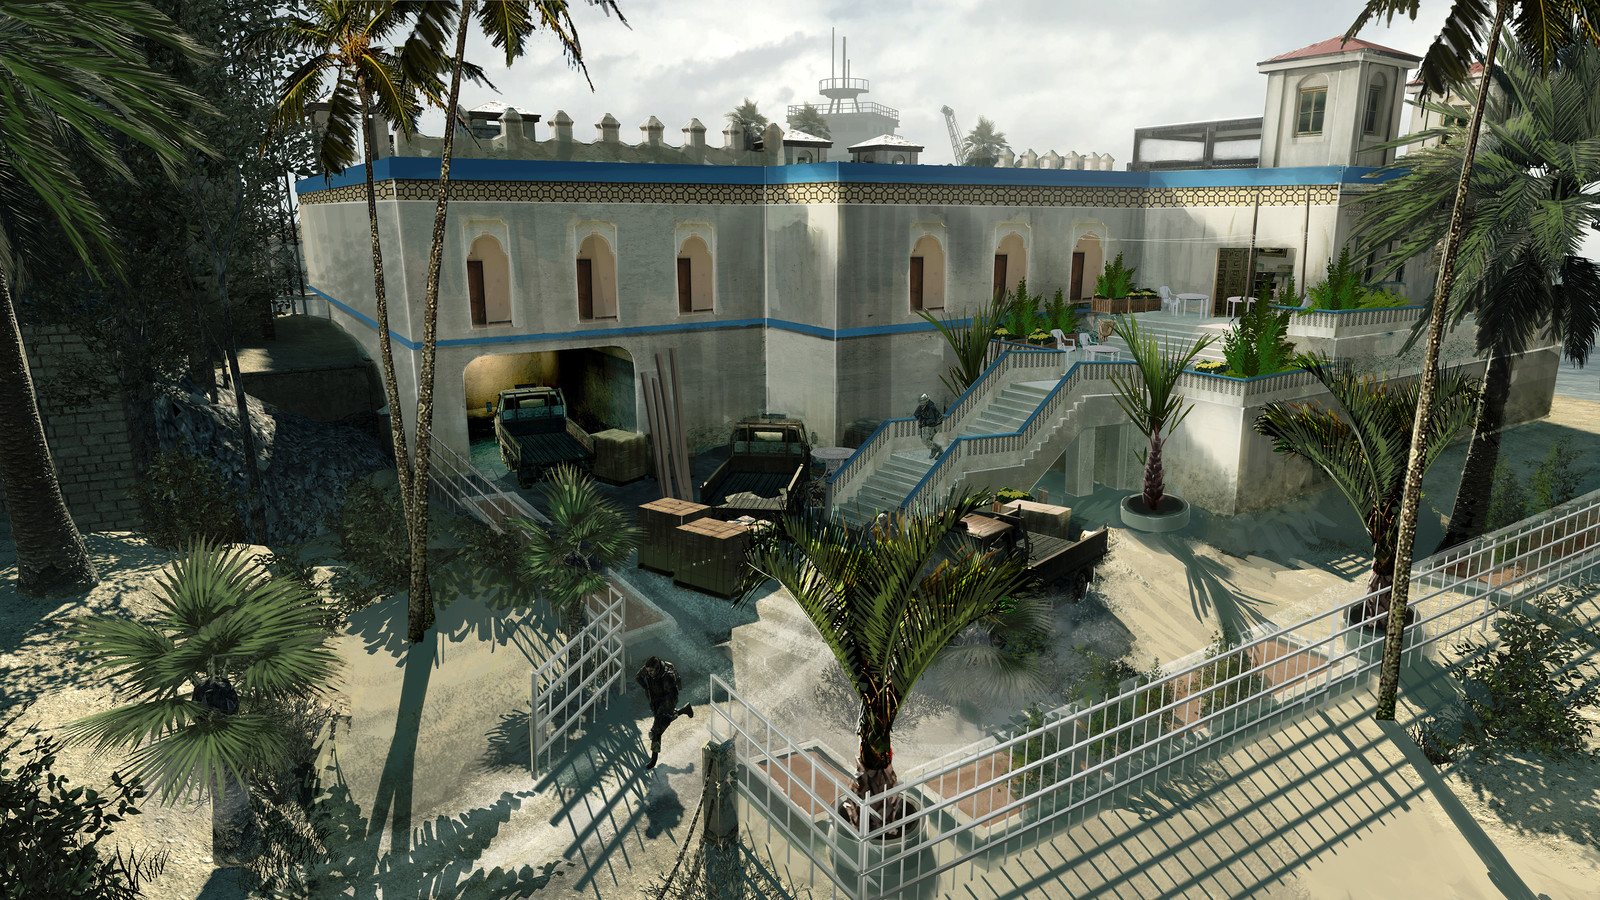 Somali compound